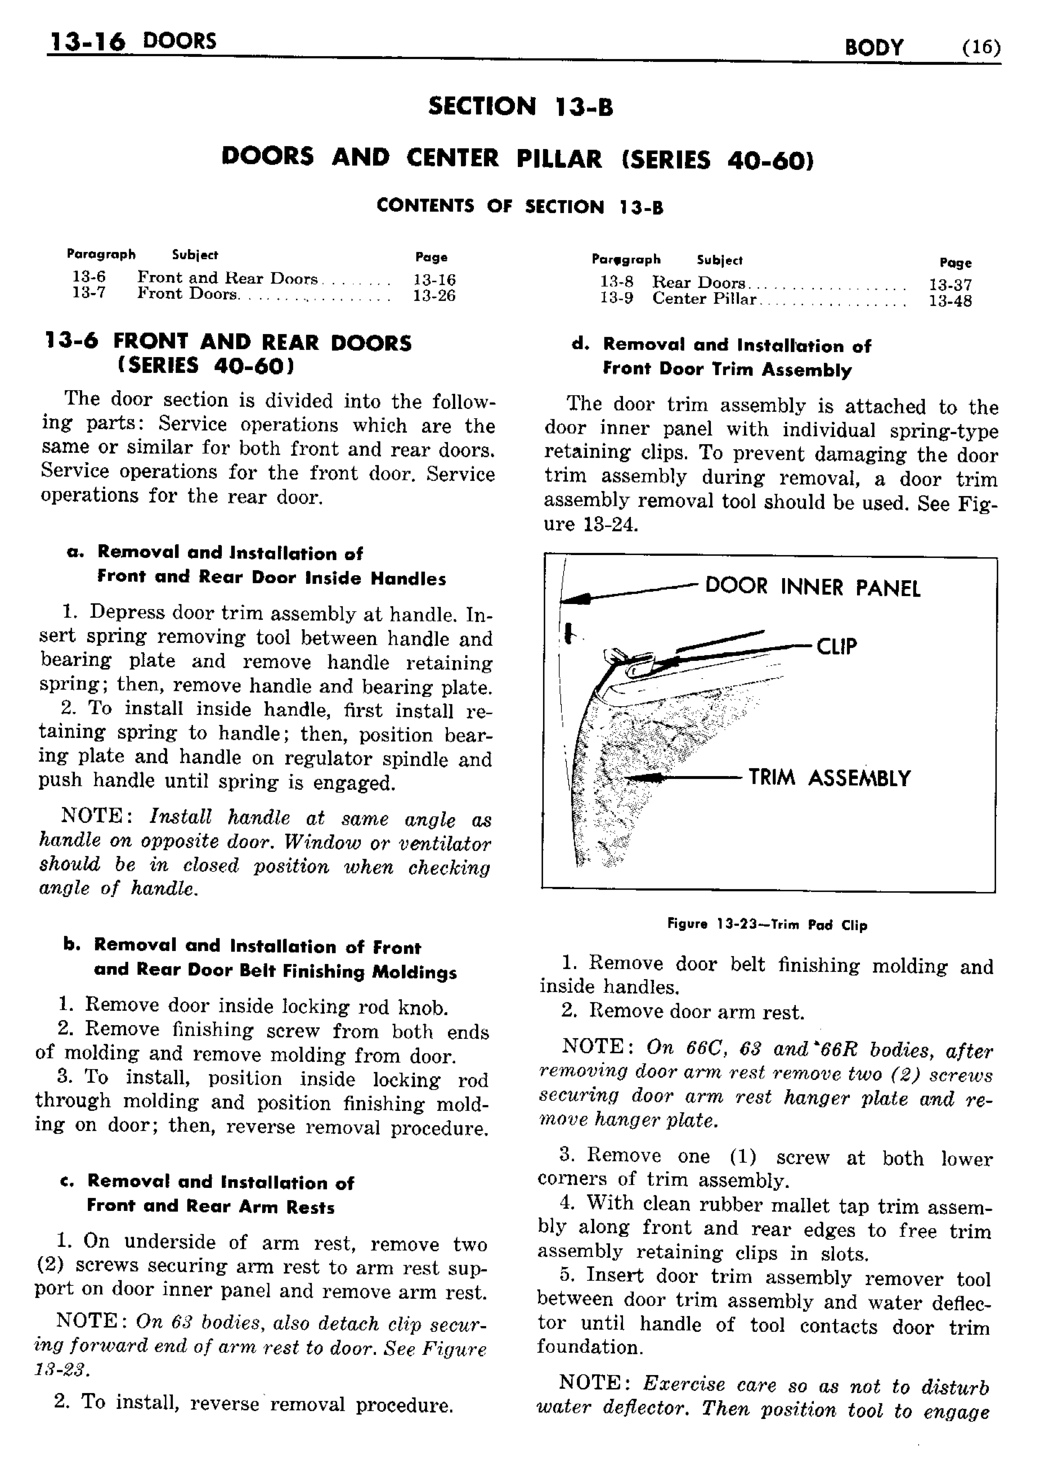 n_1958 Buick Body Service Manual-017-017.jpg